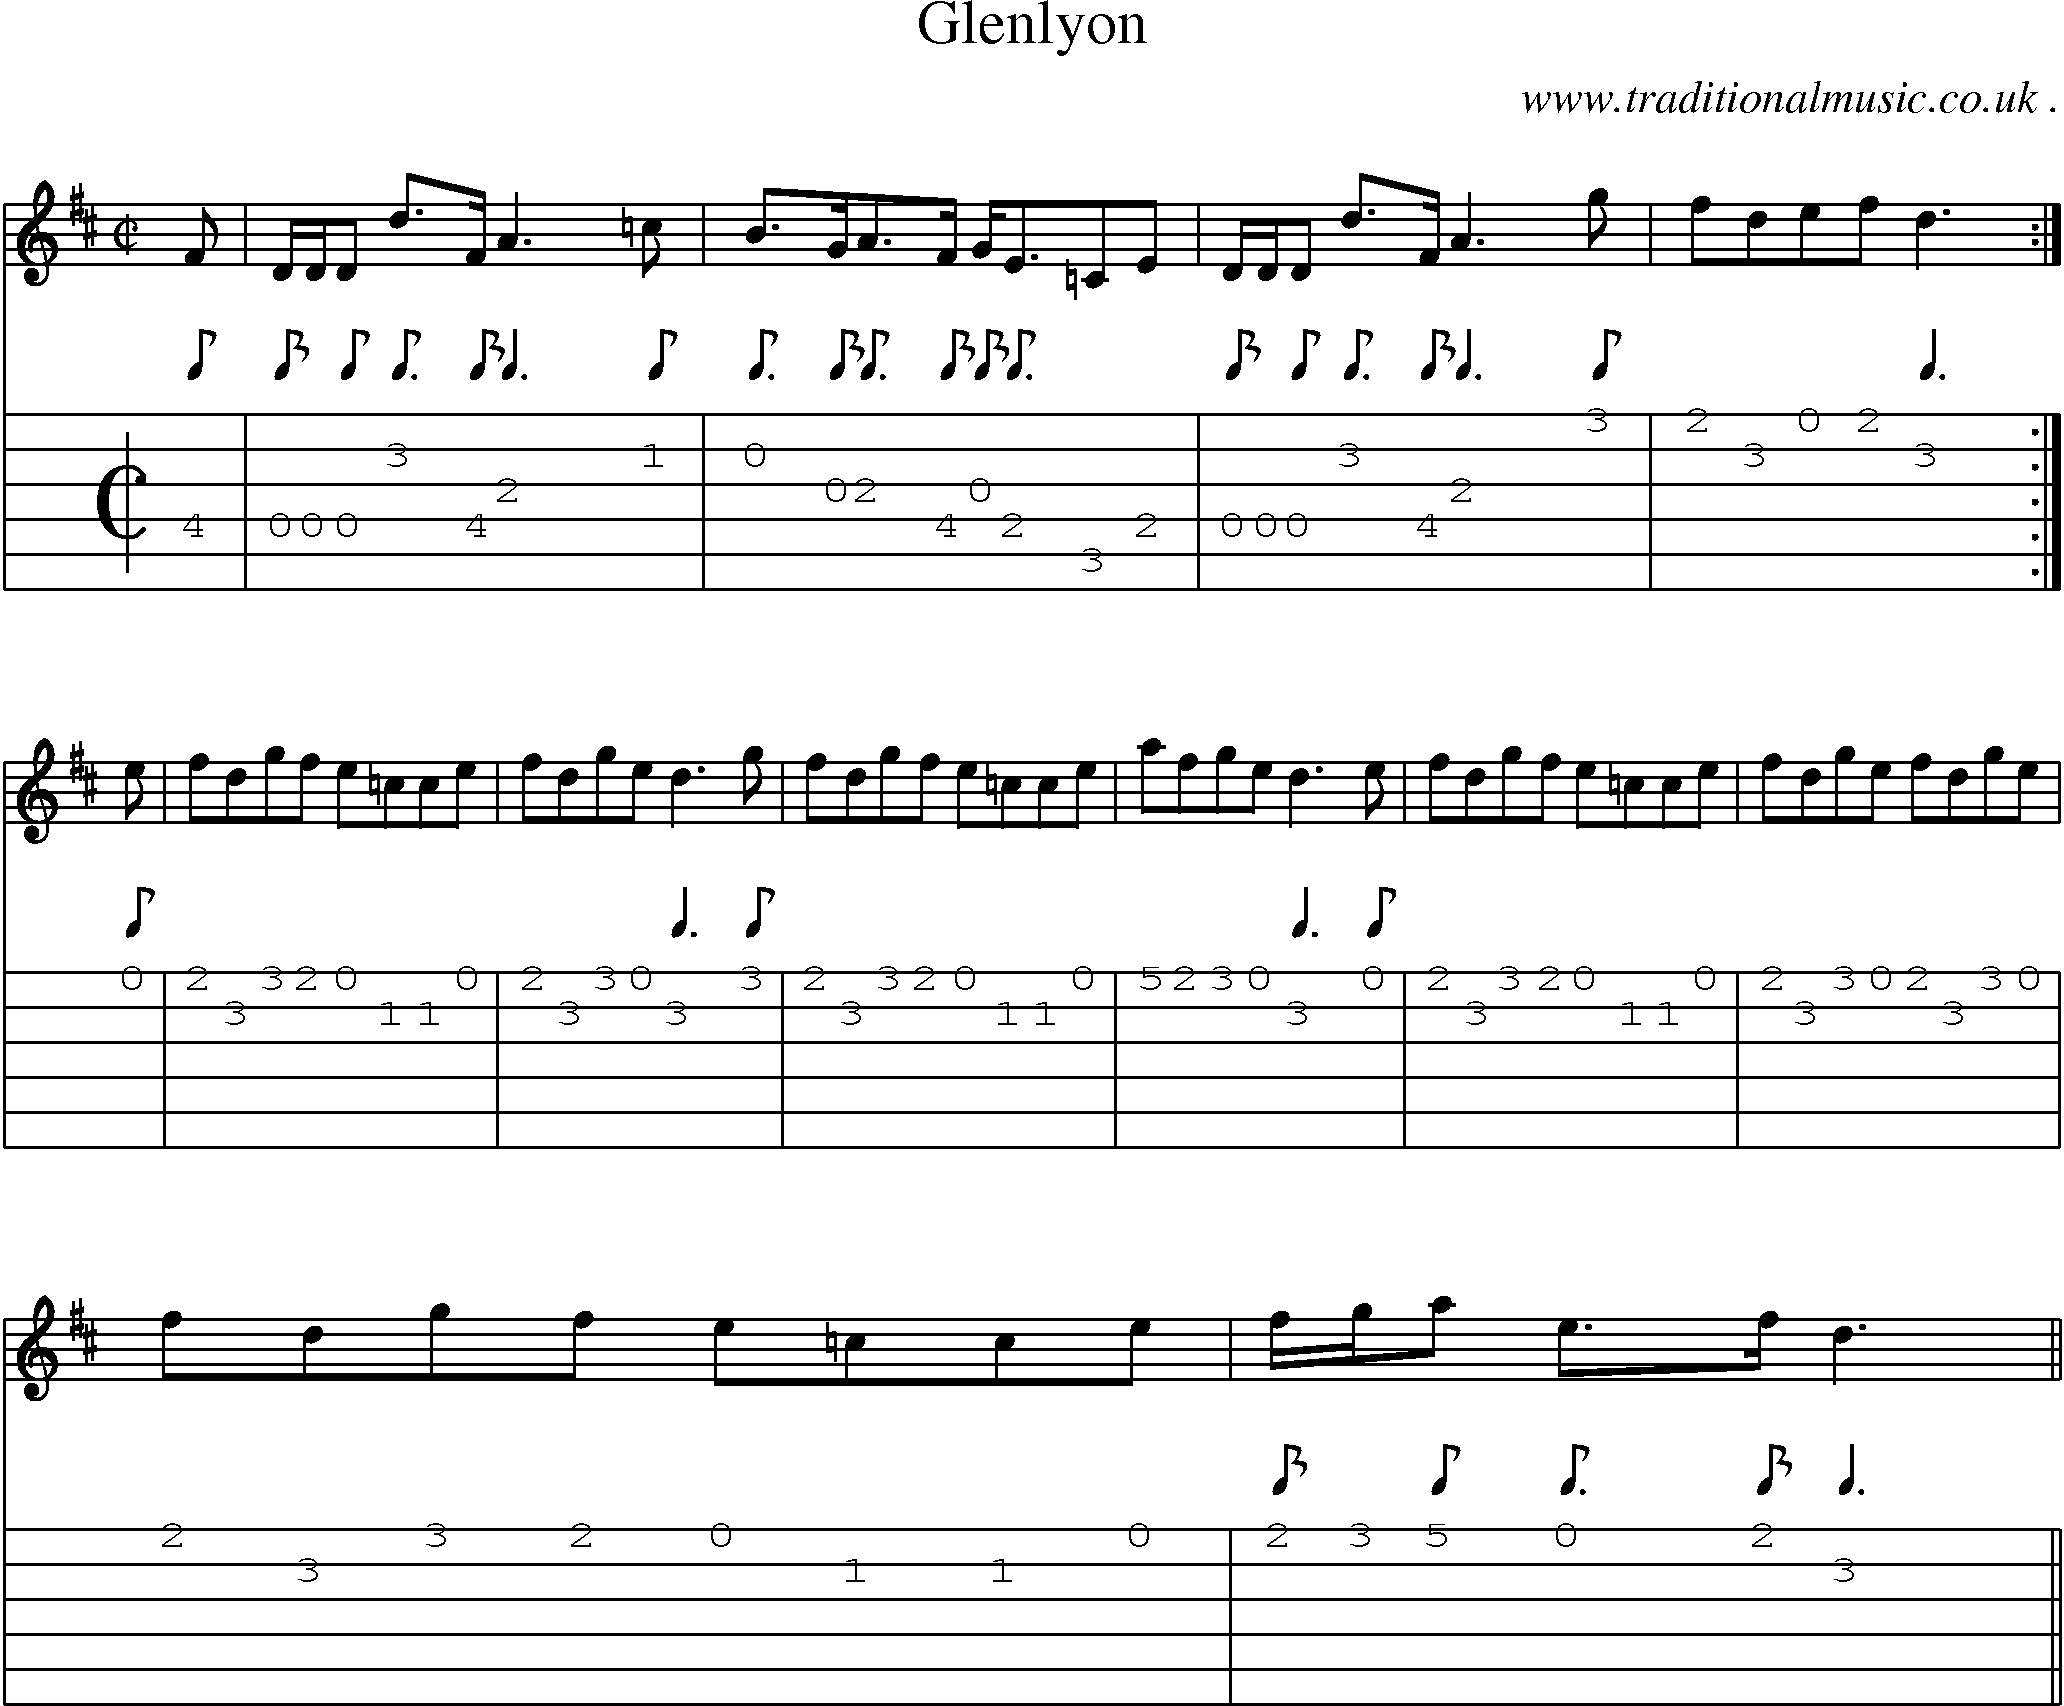 Sheet-music  score, Chords and Guitar Tabs for Glenlyon